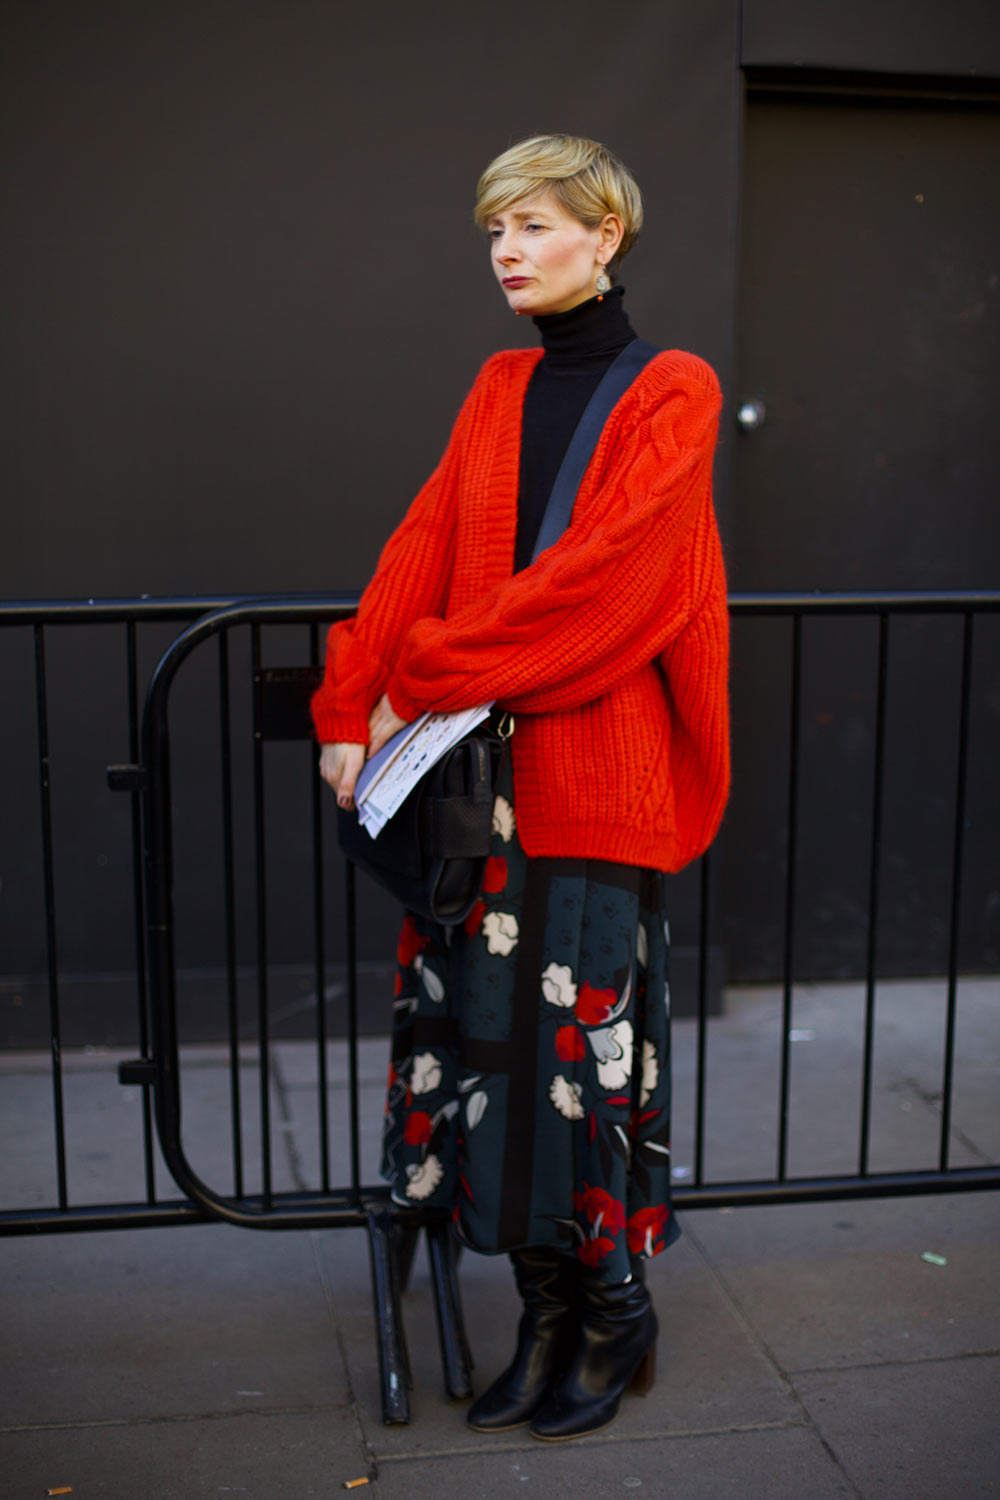 Miista Street Style from London Fashion Week 2018